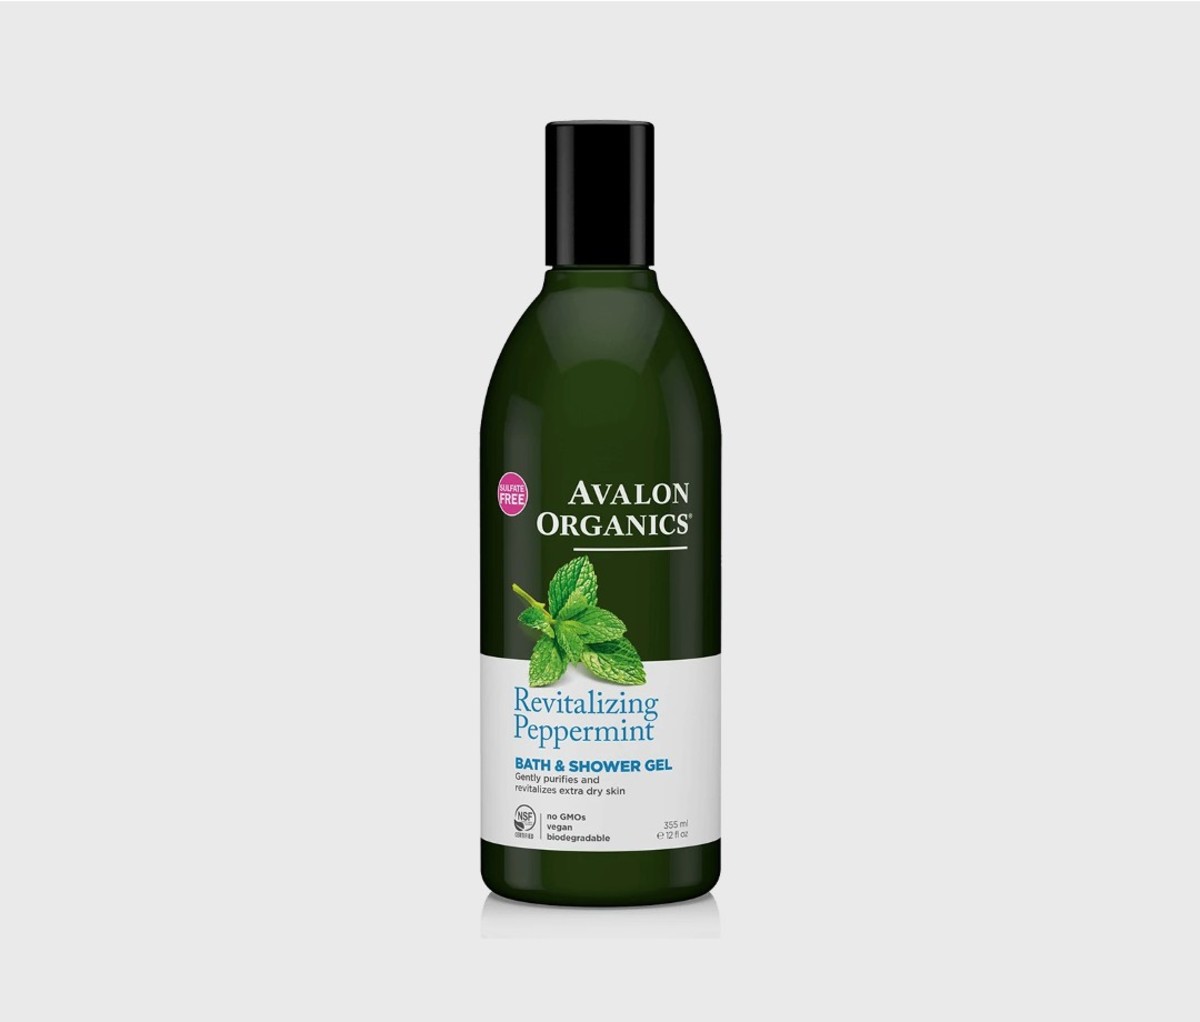 Avalon Organics’ Revitalizing Peppermint Bath and Shower Gel